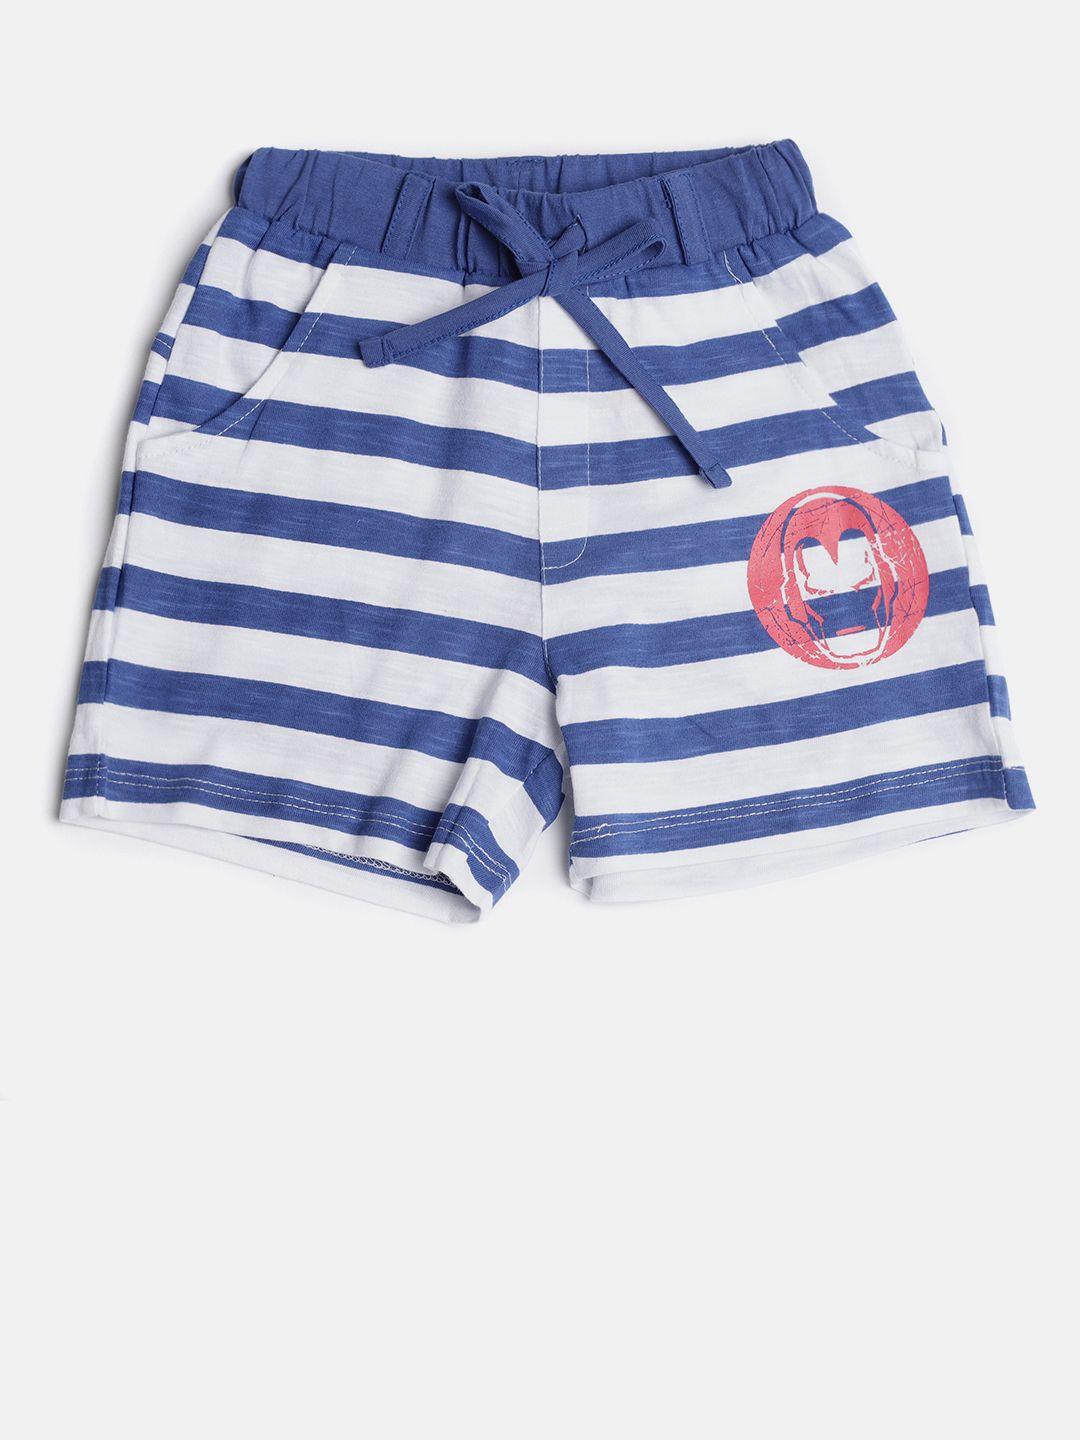 yk boys white & blue striped regular shorts